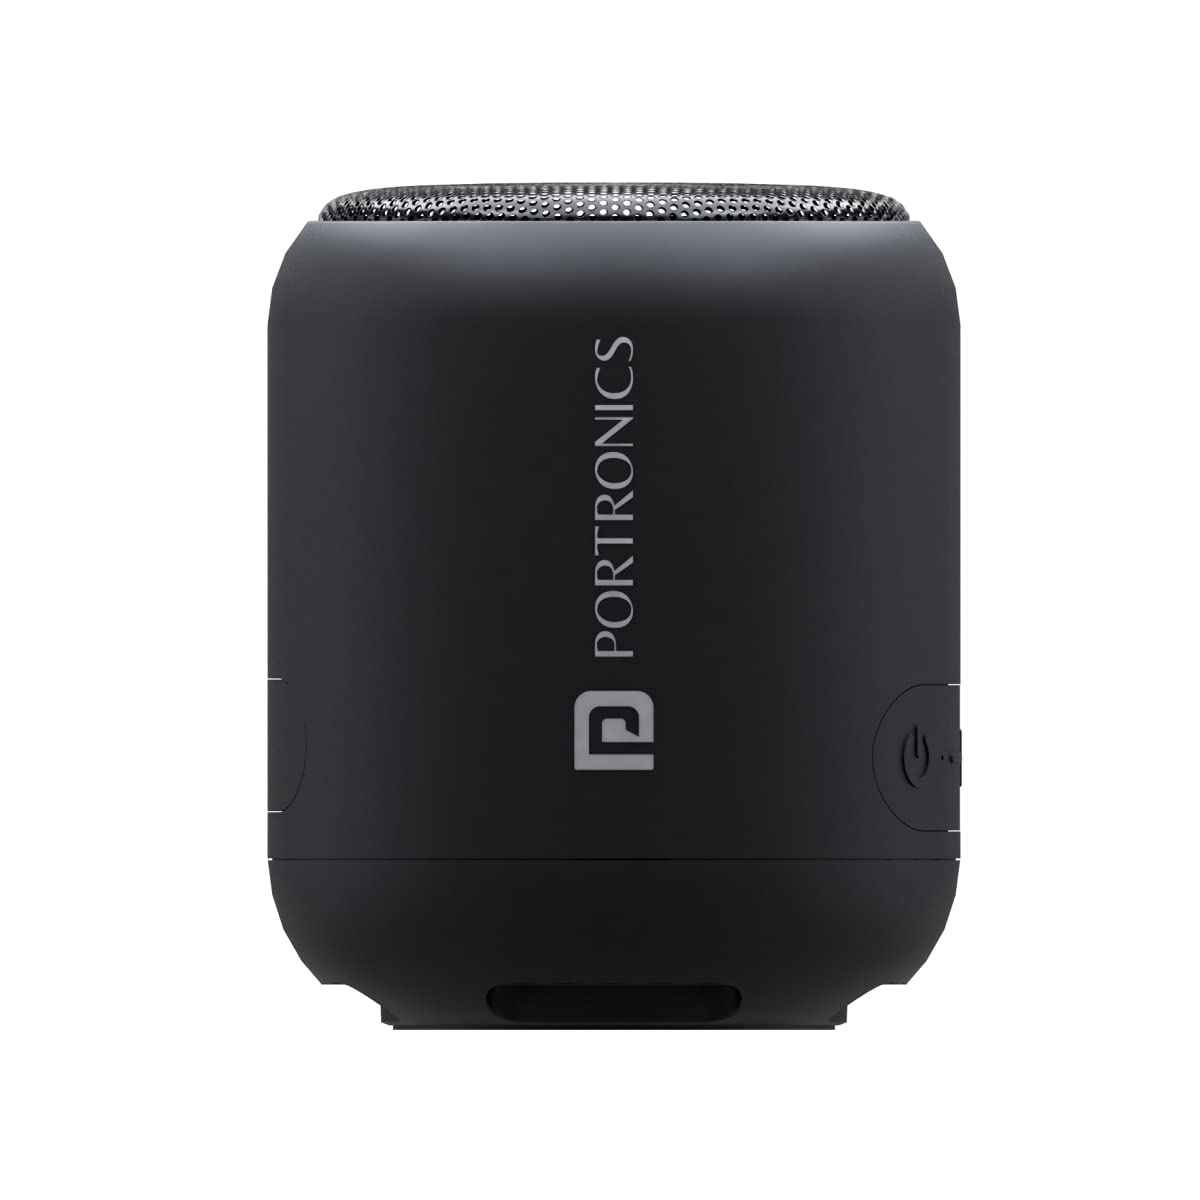 Protronics - Sound Drum 1 - 10W Portable Bluetooth Speaker